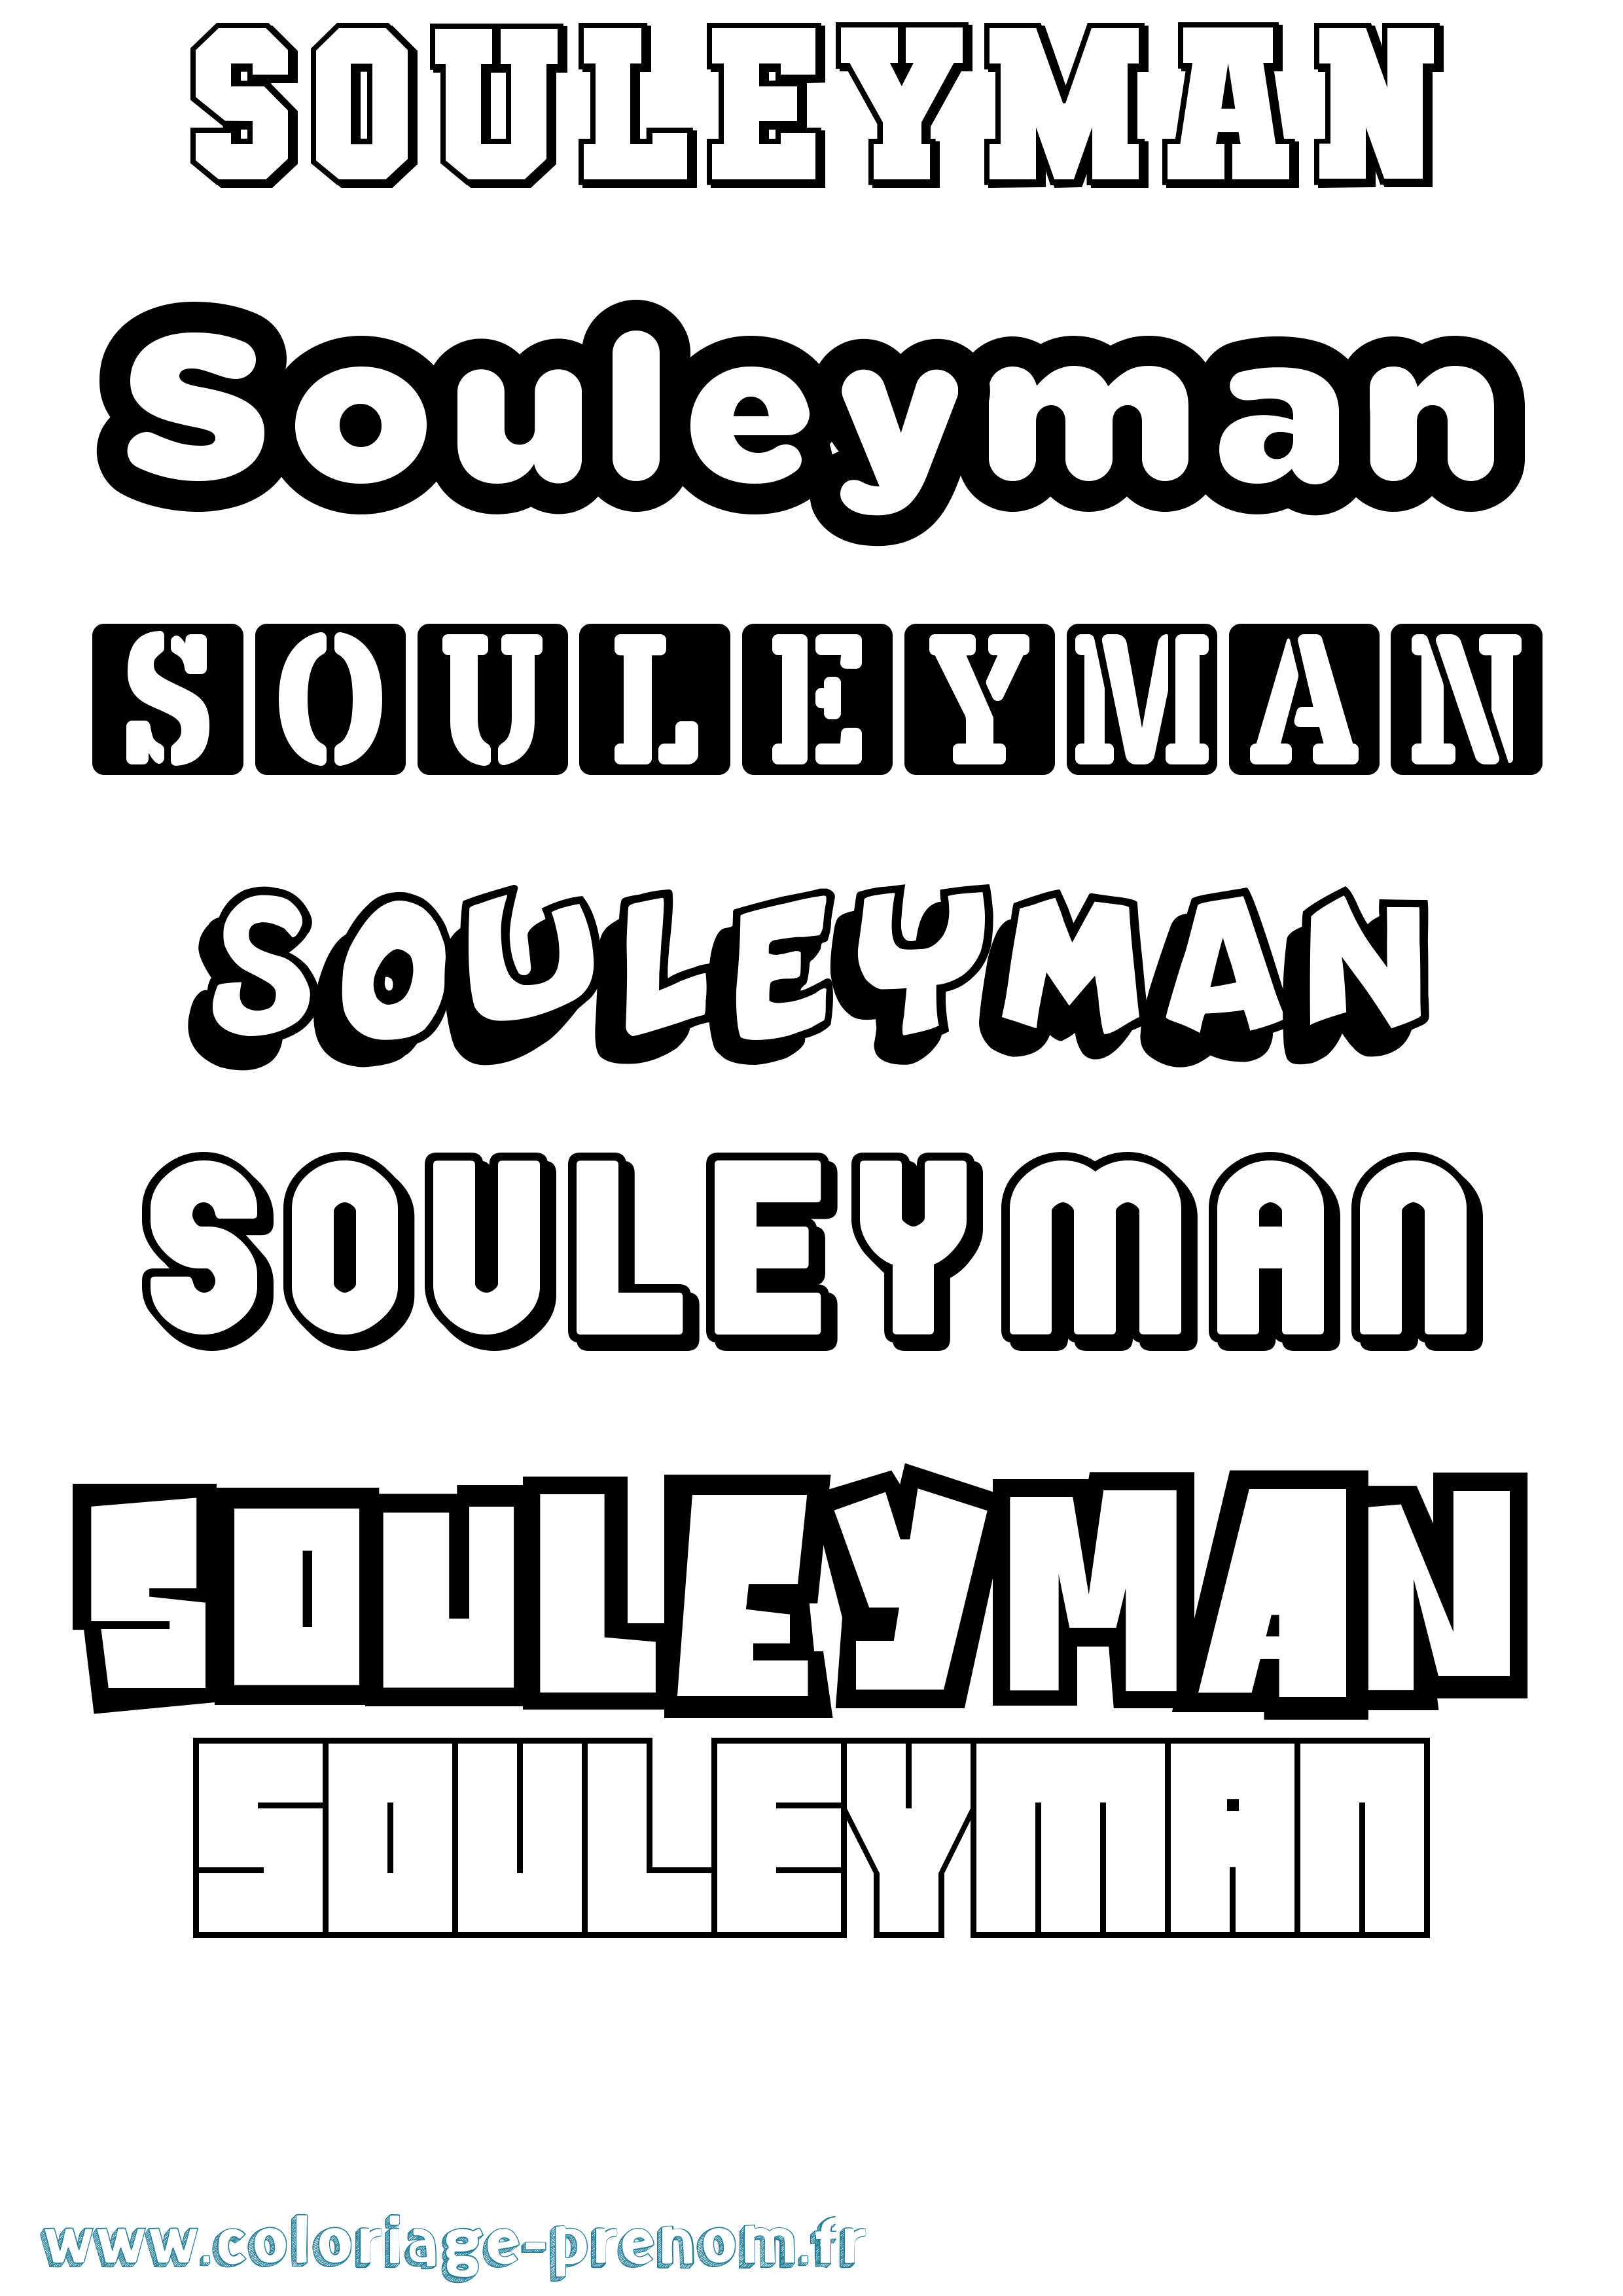 Coloriage prénom Souleyman Simple